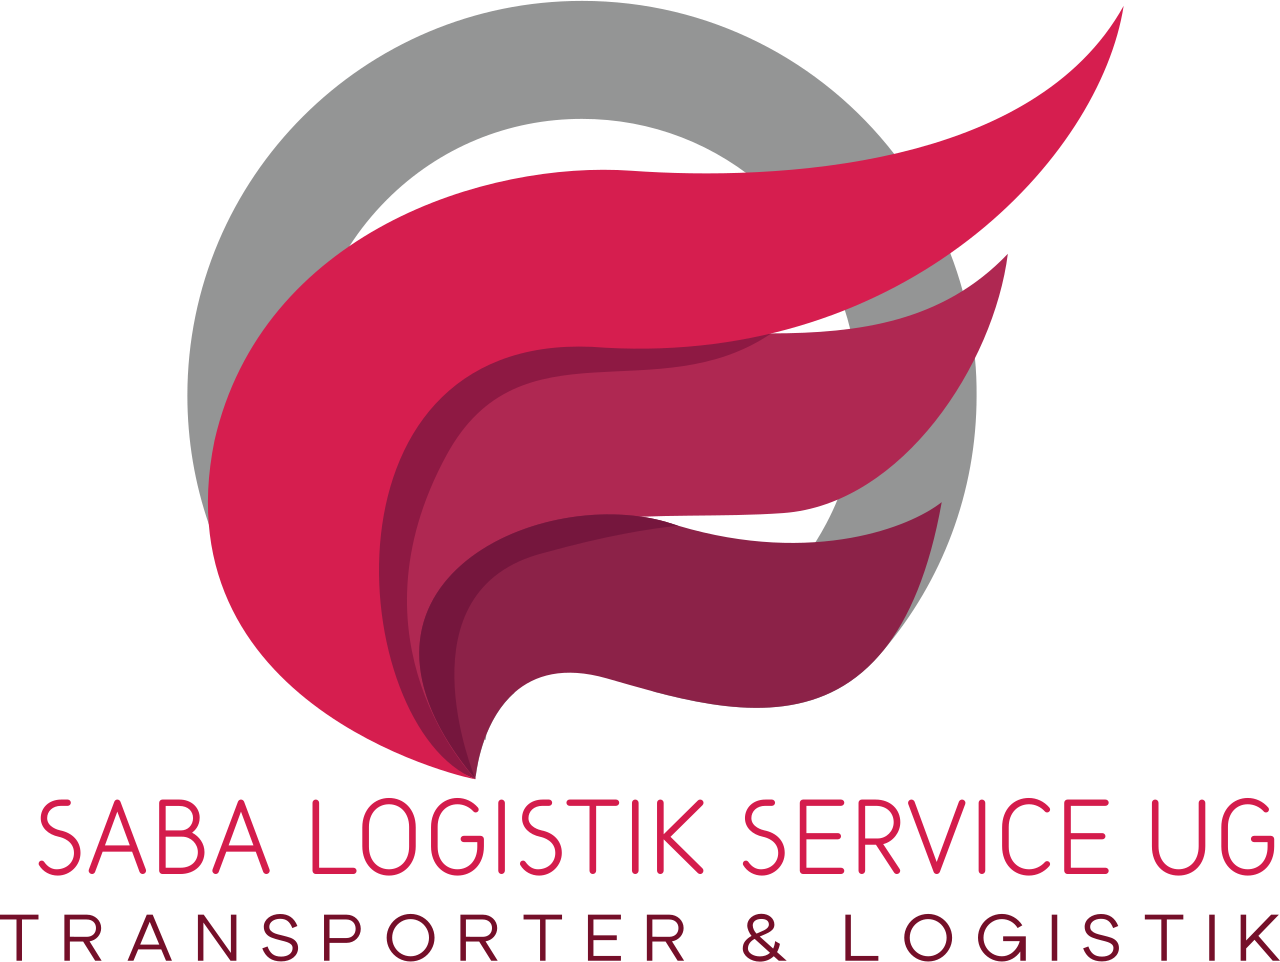 Saba Logistik Service UG's web page